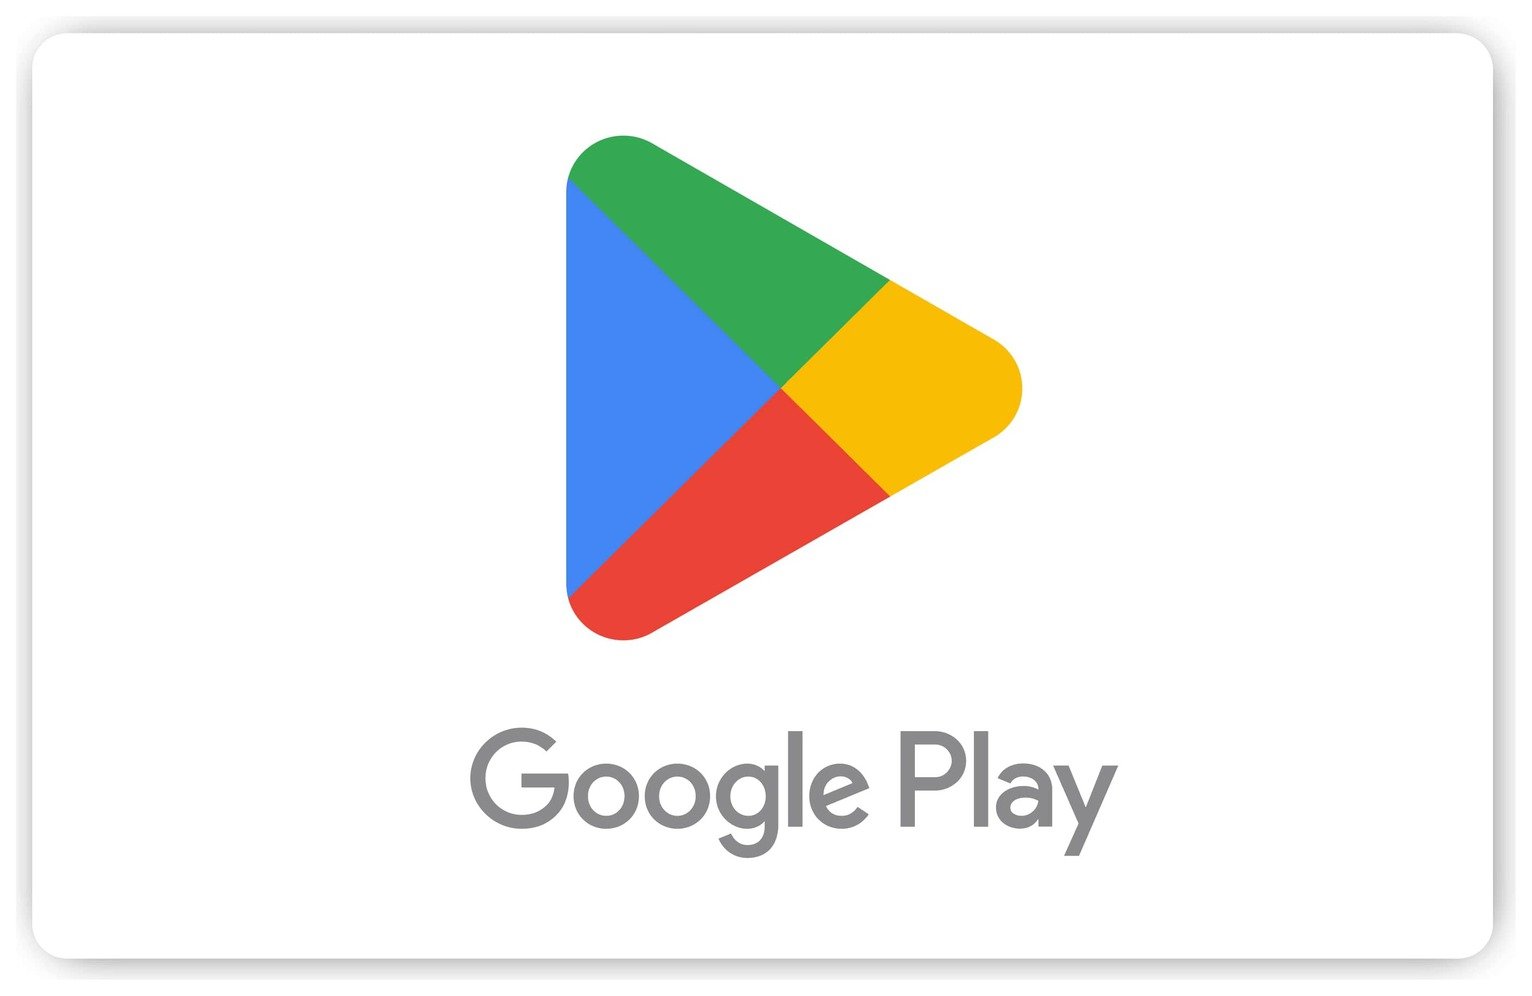 Google Play 10 GBP Gift Code